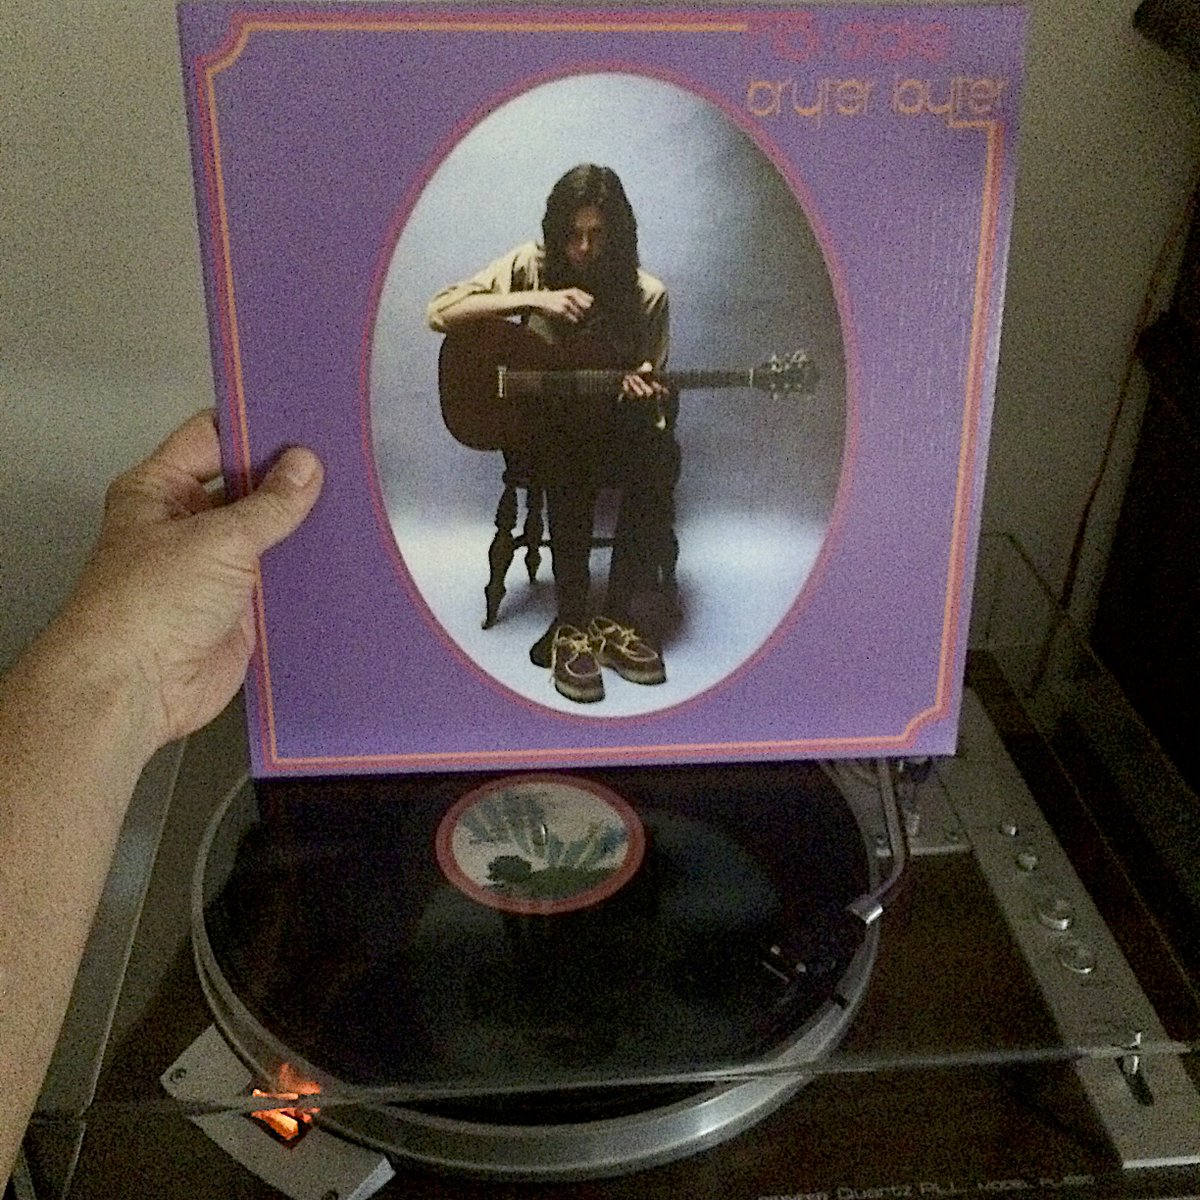 Listening to 1971 #NickDrake #BryterLayter #shivers #goodvibes #vinyl #LP #firsttimeonvinyl #tears #wonderful